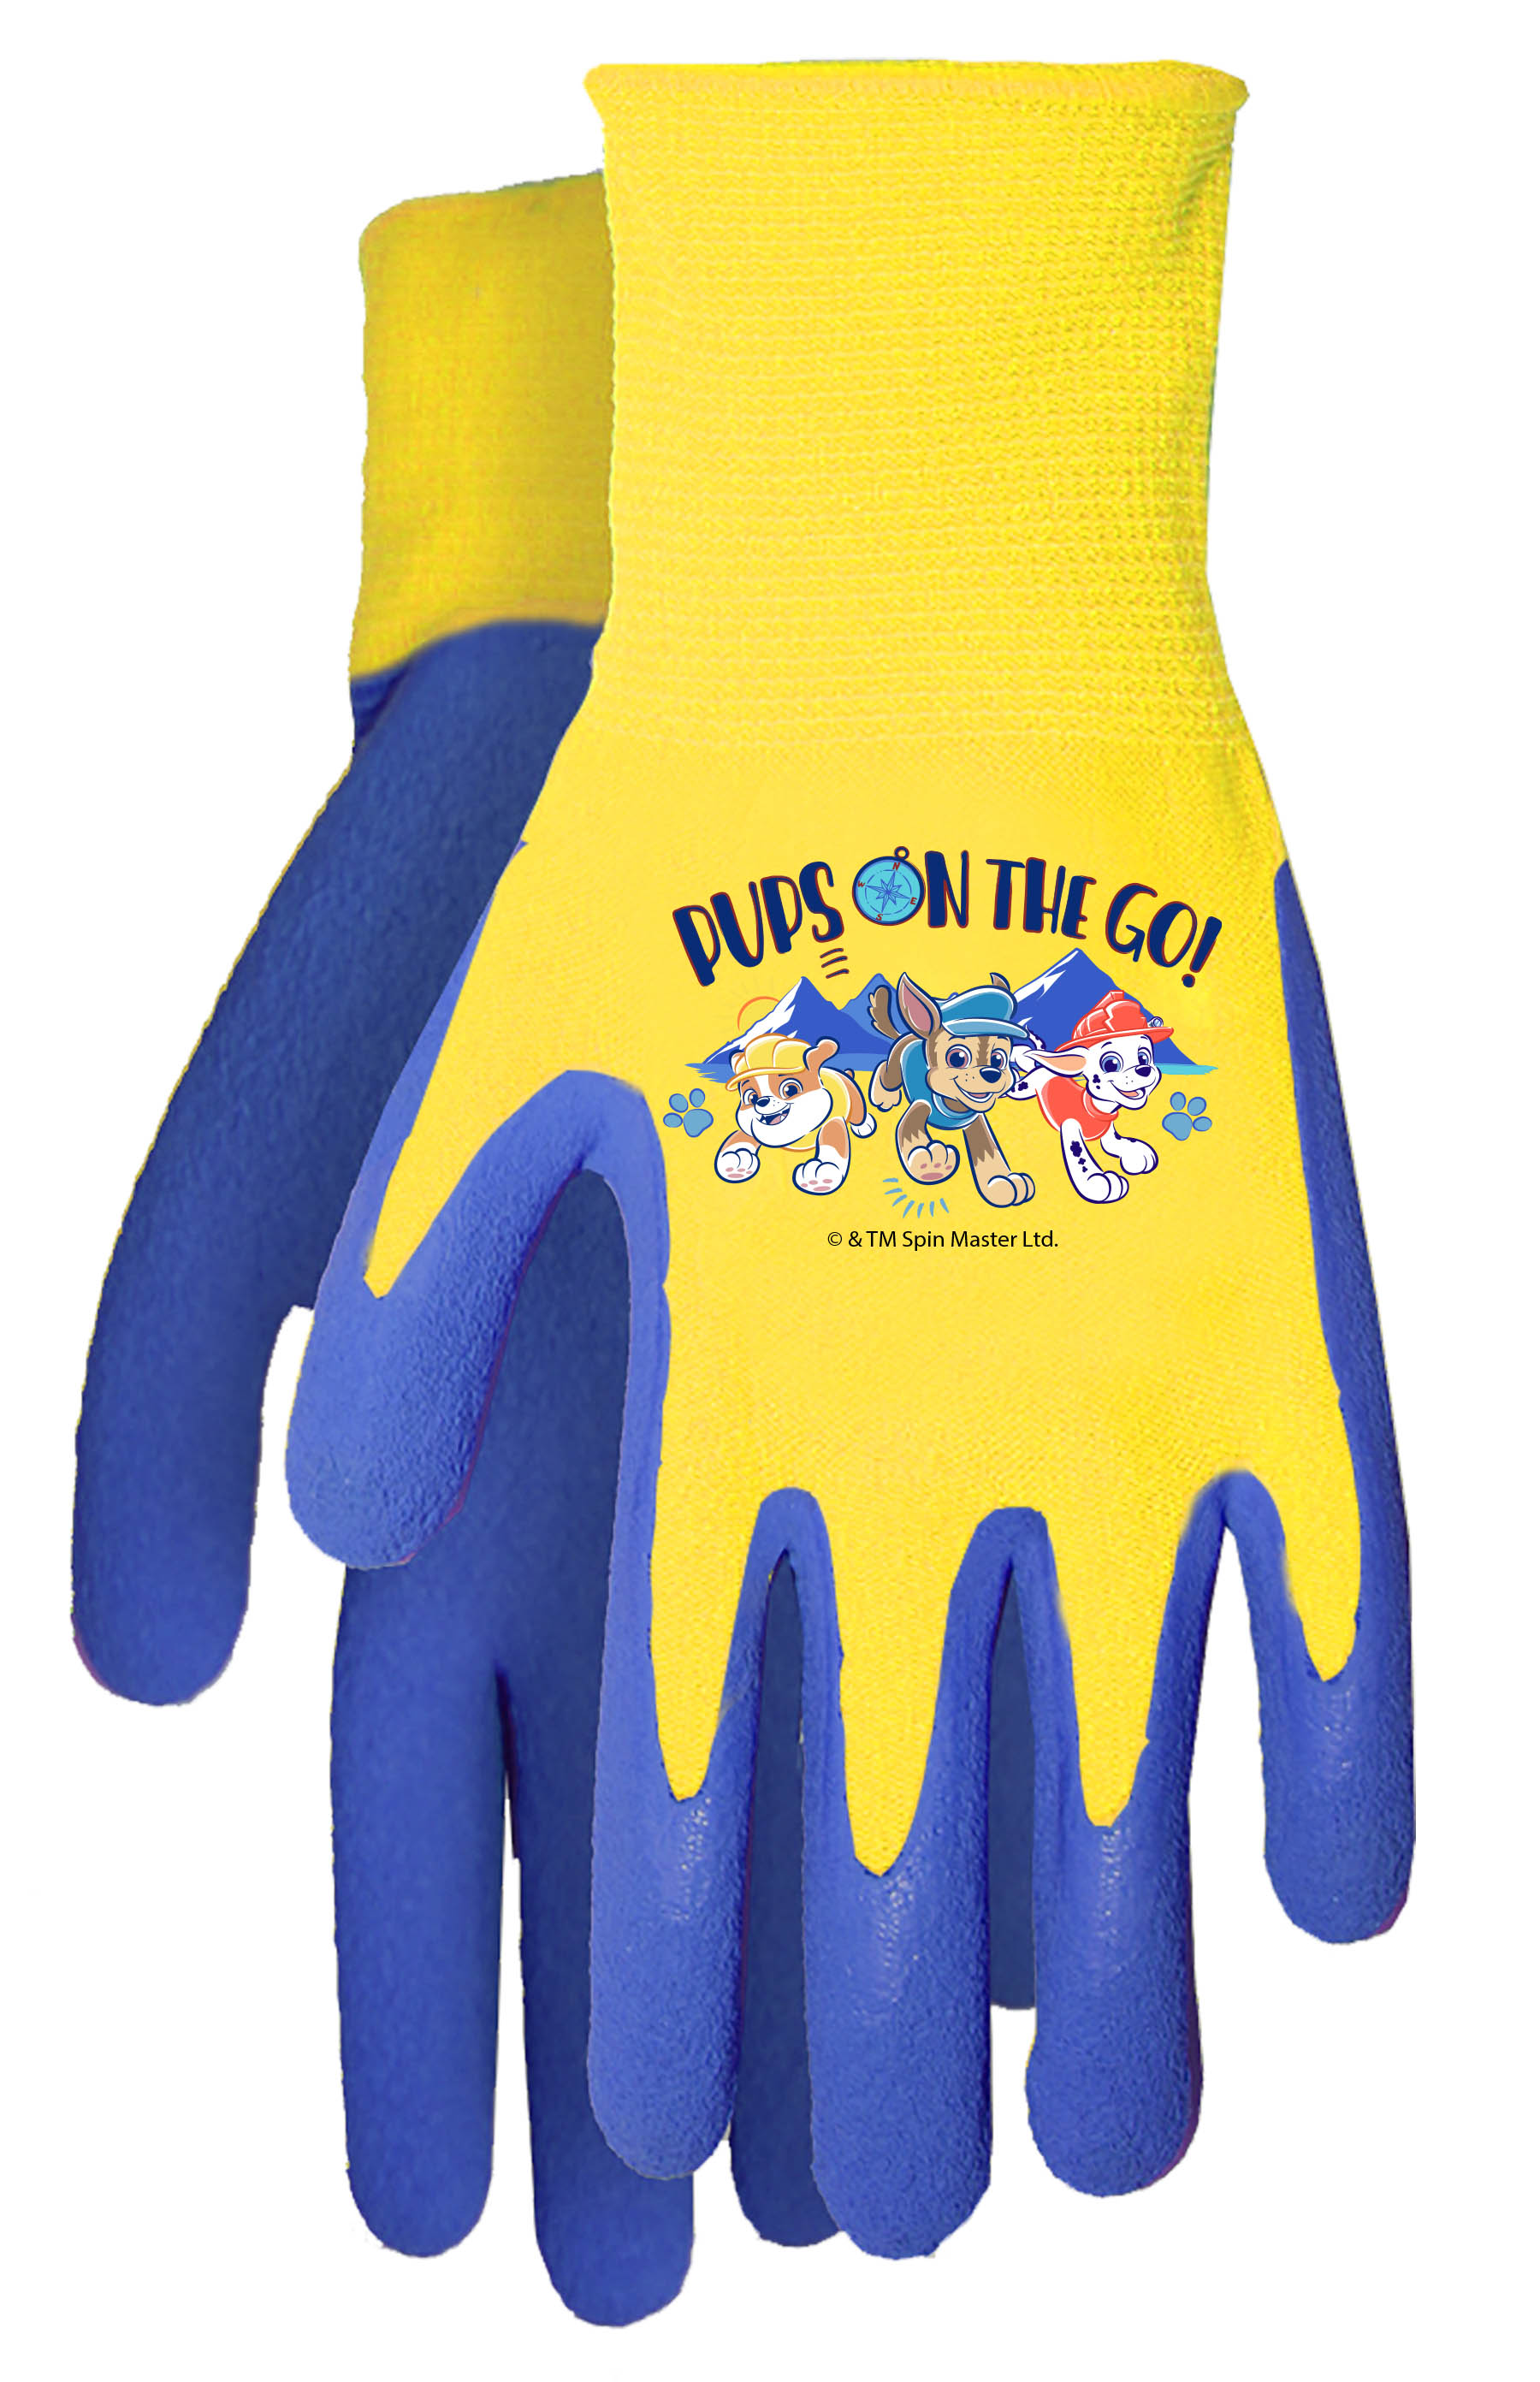 Kids Childs Unisex Yellow Gloves with Black Rubber Grips Football Gardening Work 